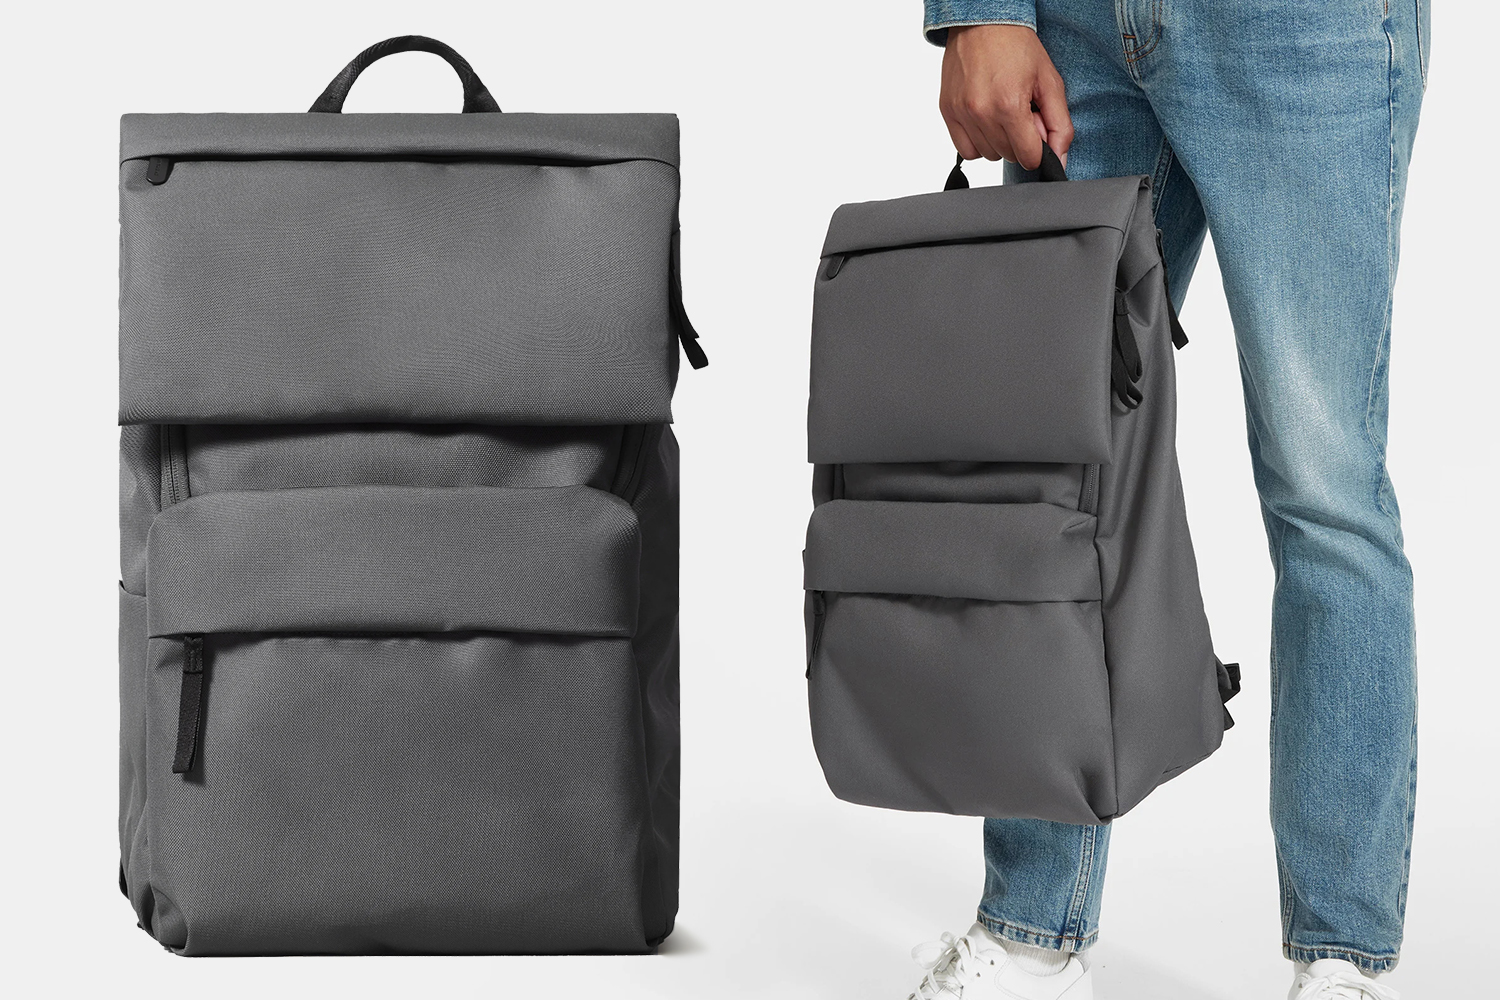 Everlane Form Bag Review: The Best Everlane Bag for Travelers - AFAR